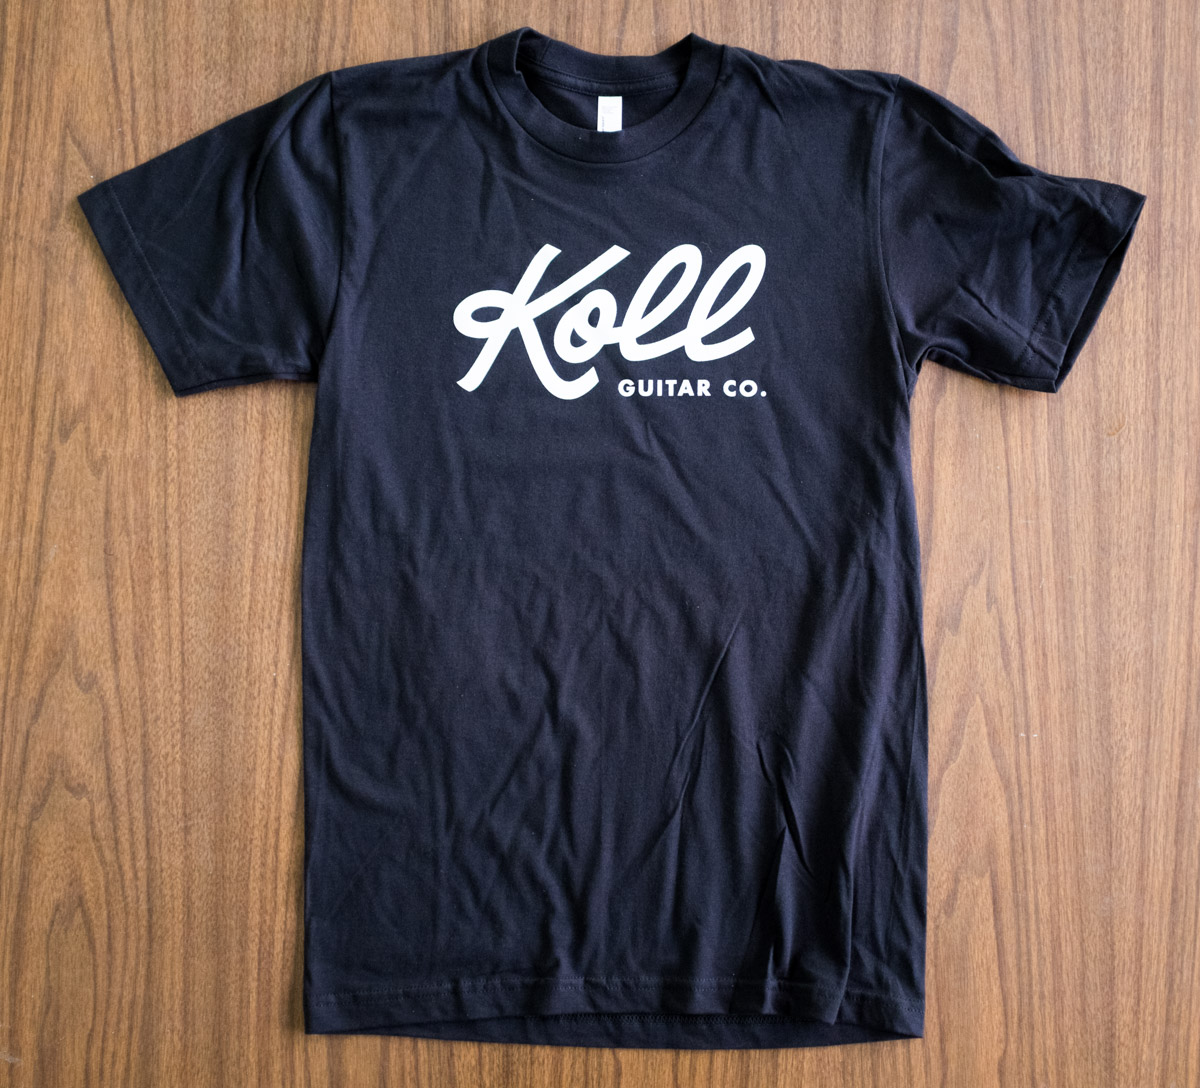 Koll Logo T-Shirt — Koll Guitar Co.